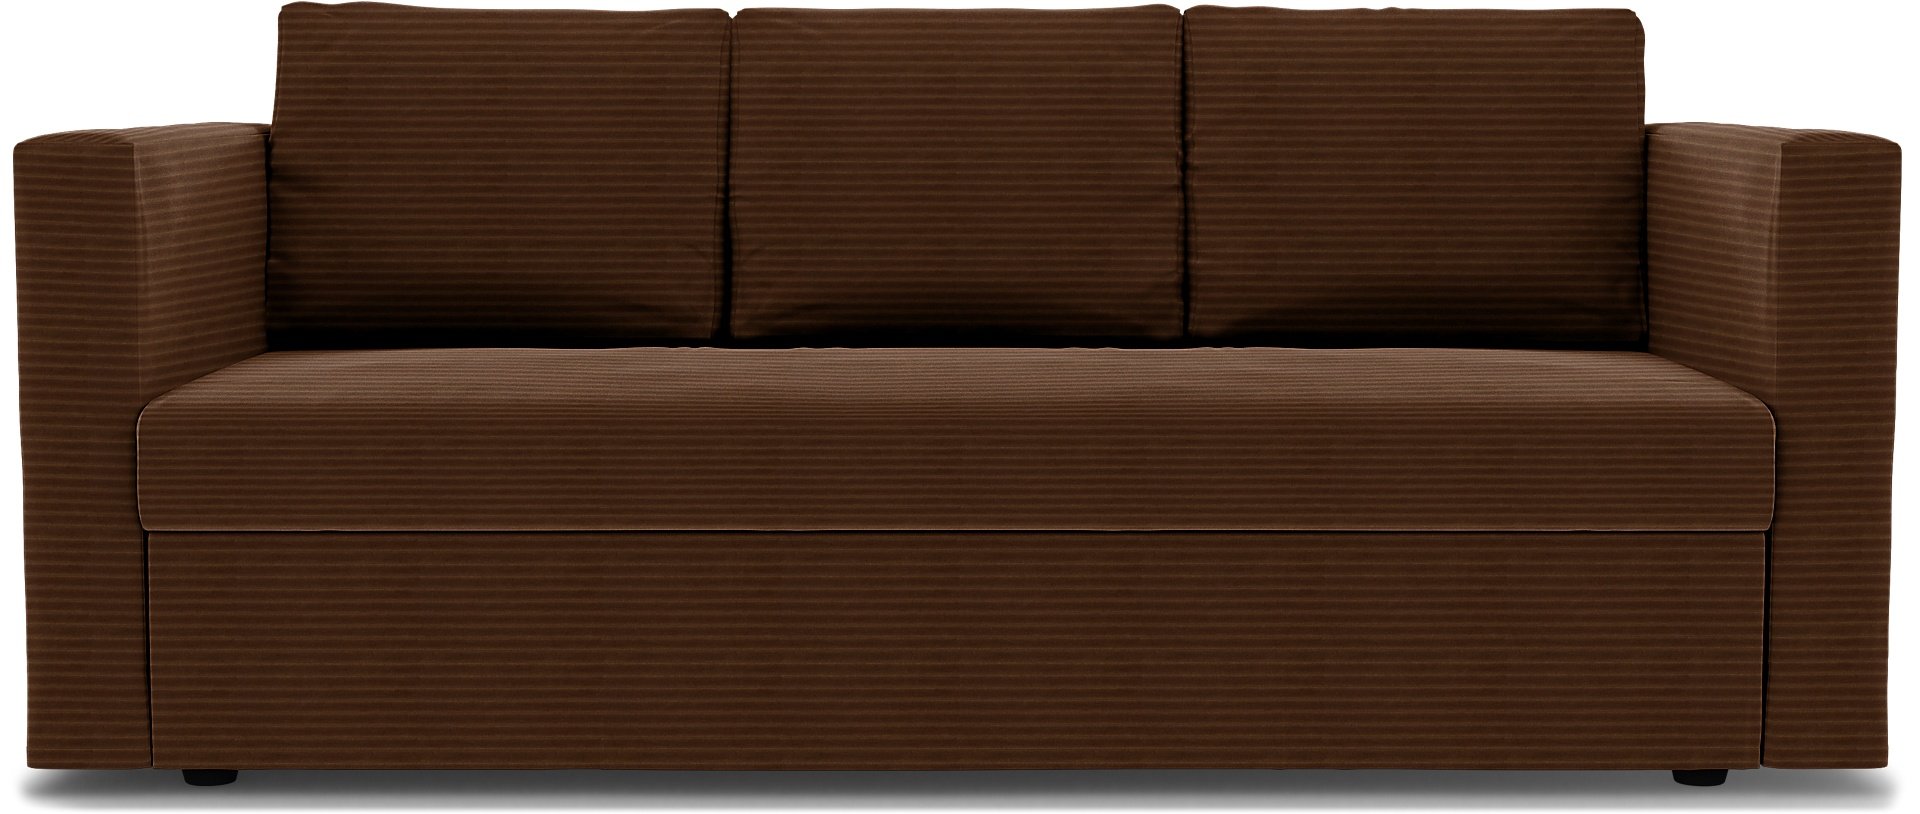 IKEA - Friheten 3 Seater Sofa Bed Cover, Chocolate Brown, Corduroy - Bemz